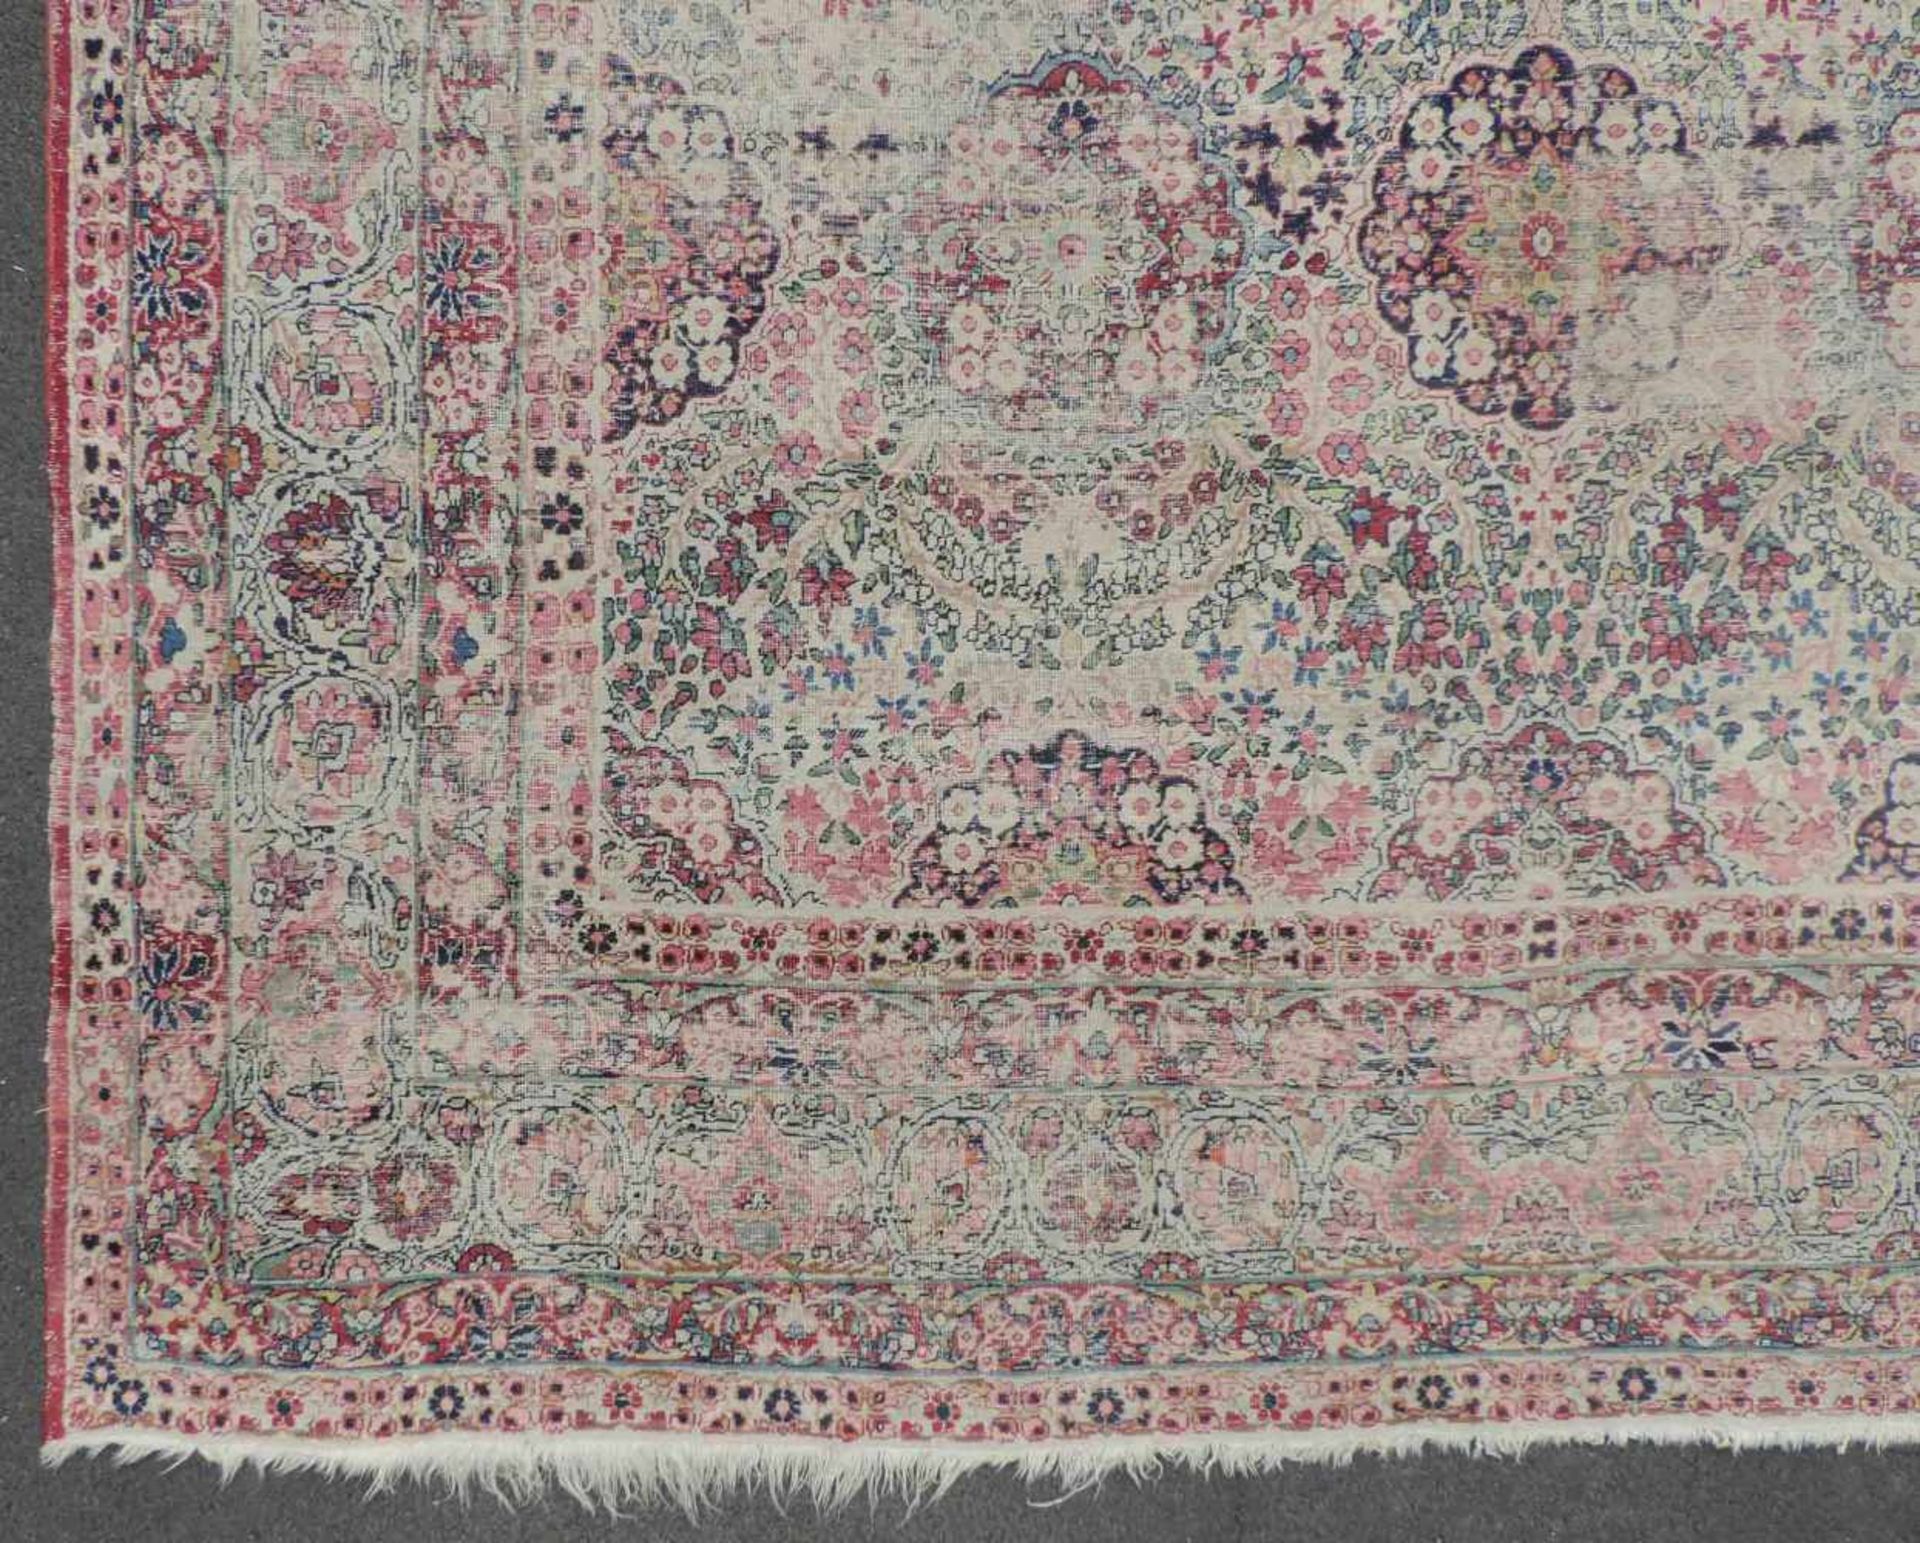 Kirman Laver Perserteppich. Iran. Antik, spätes 19. Jahrhundert. 329 cm x 275 cm. Handgeknüpft. - Bild 2 aus 8